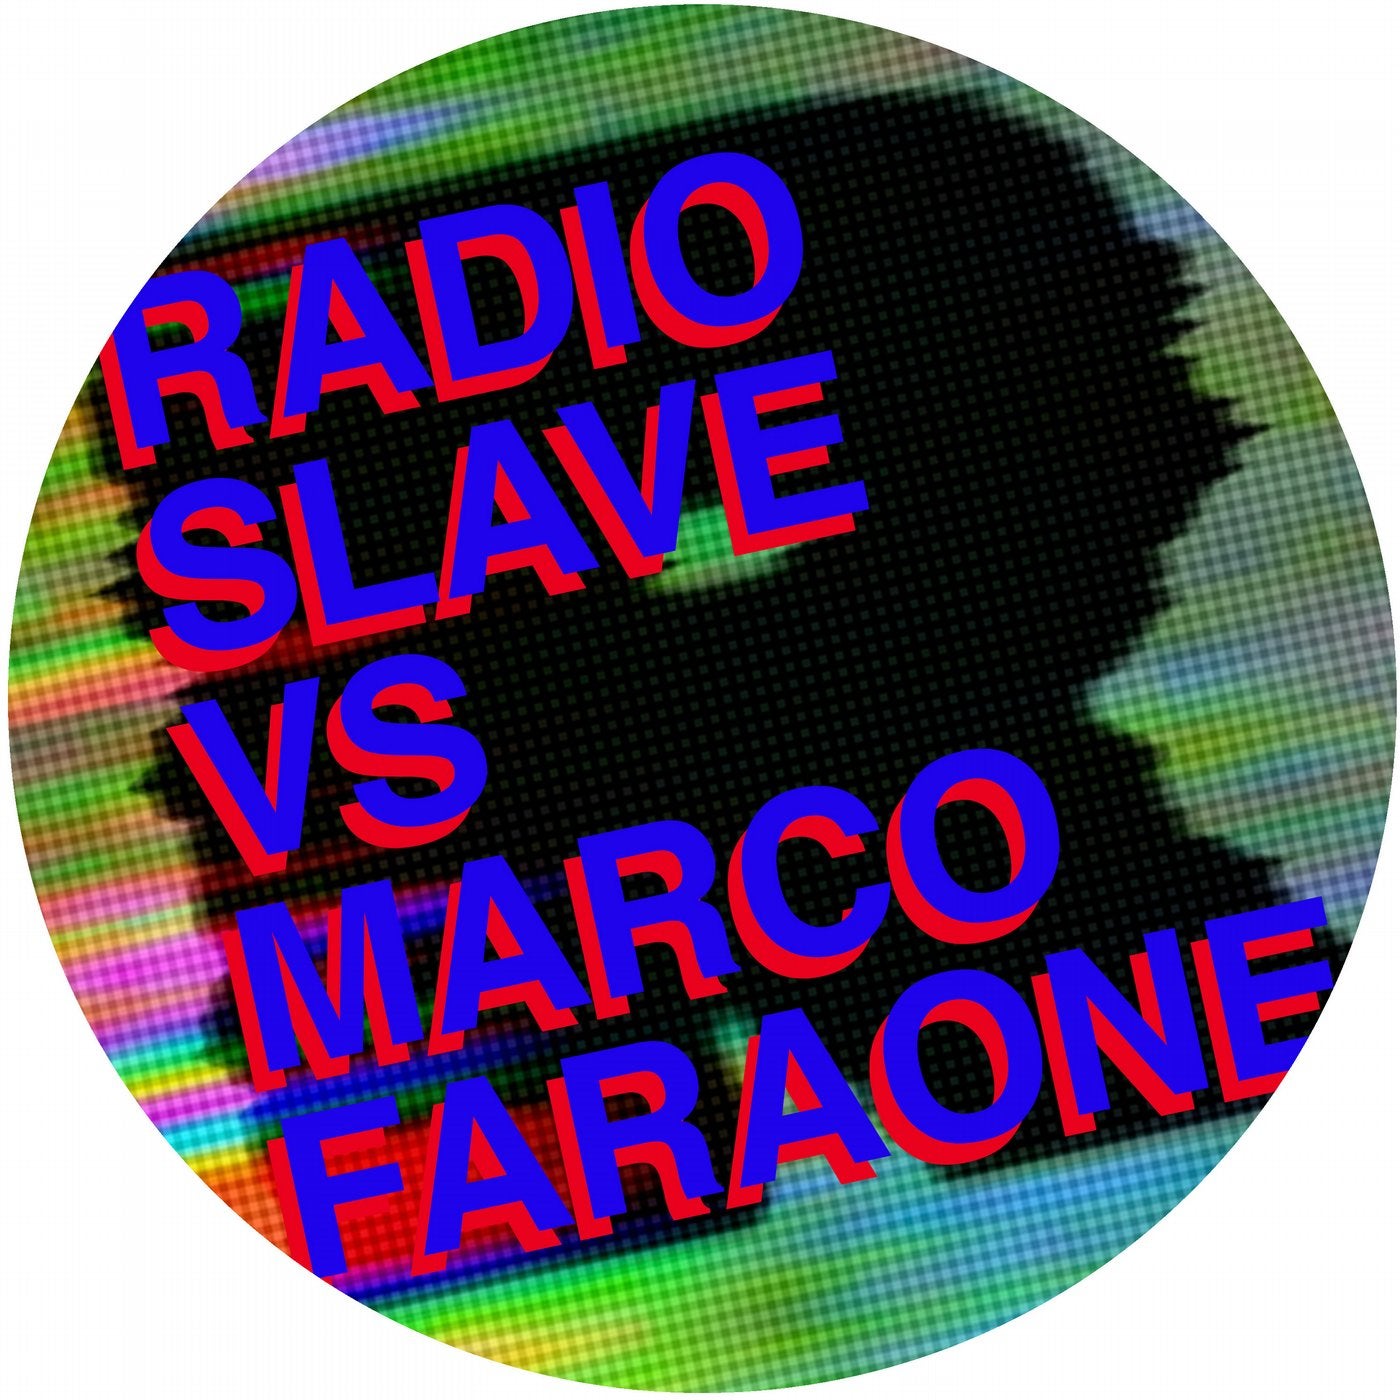 The Marco Faraone Remixes